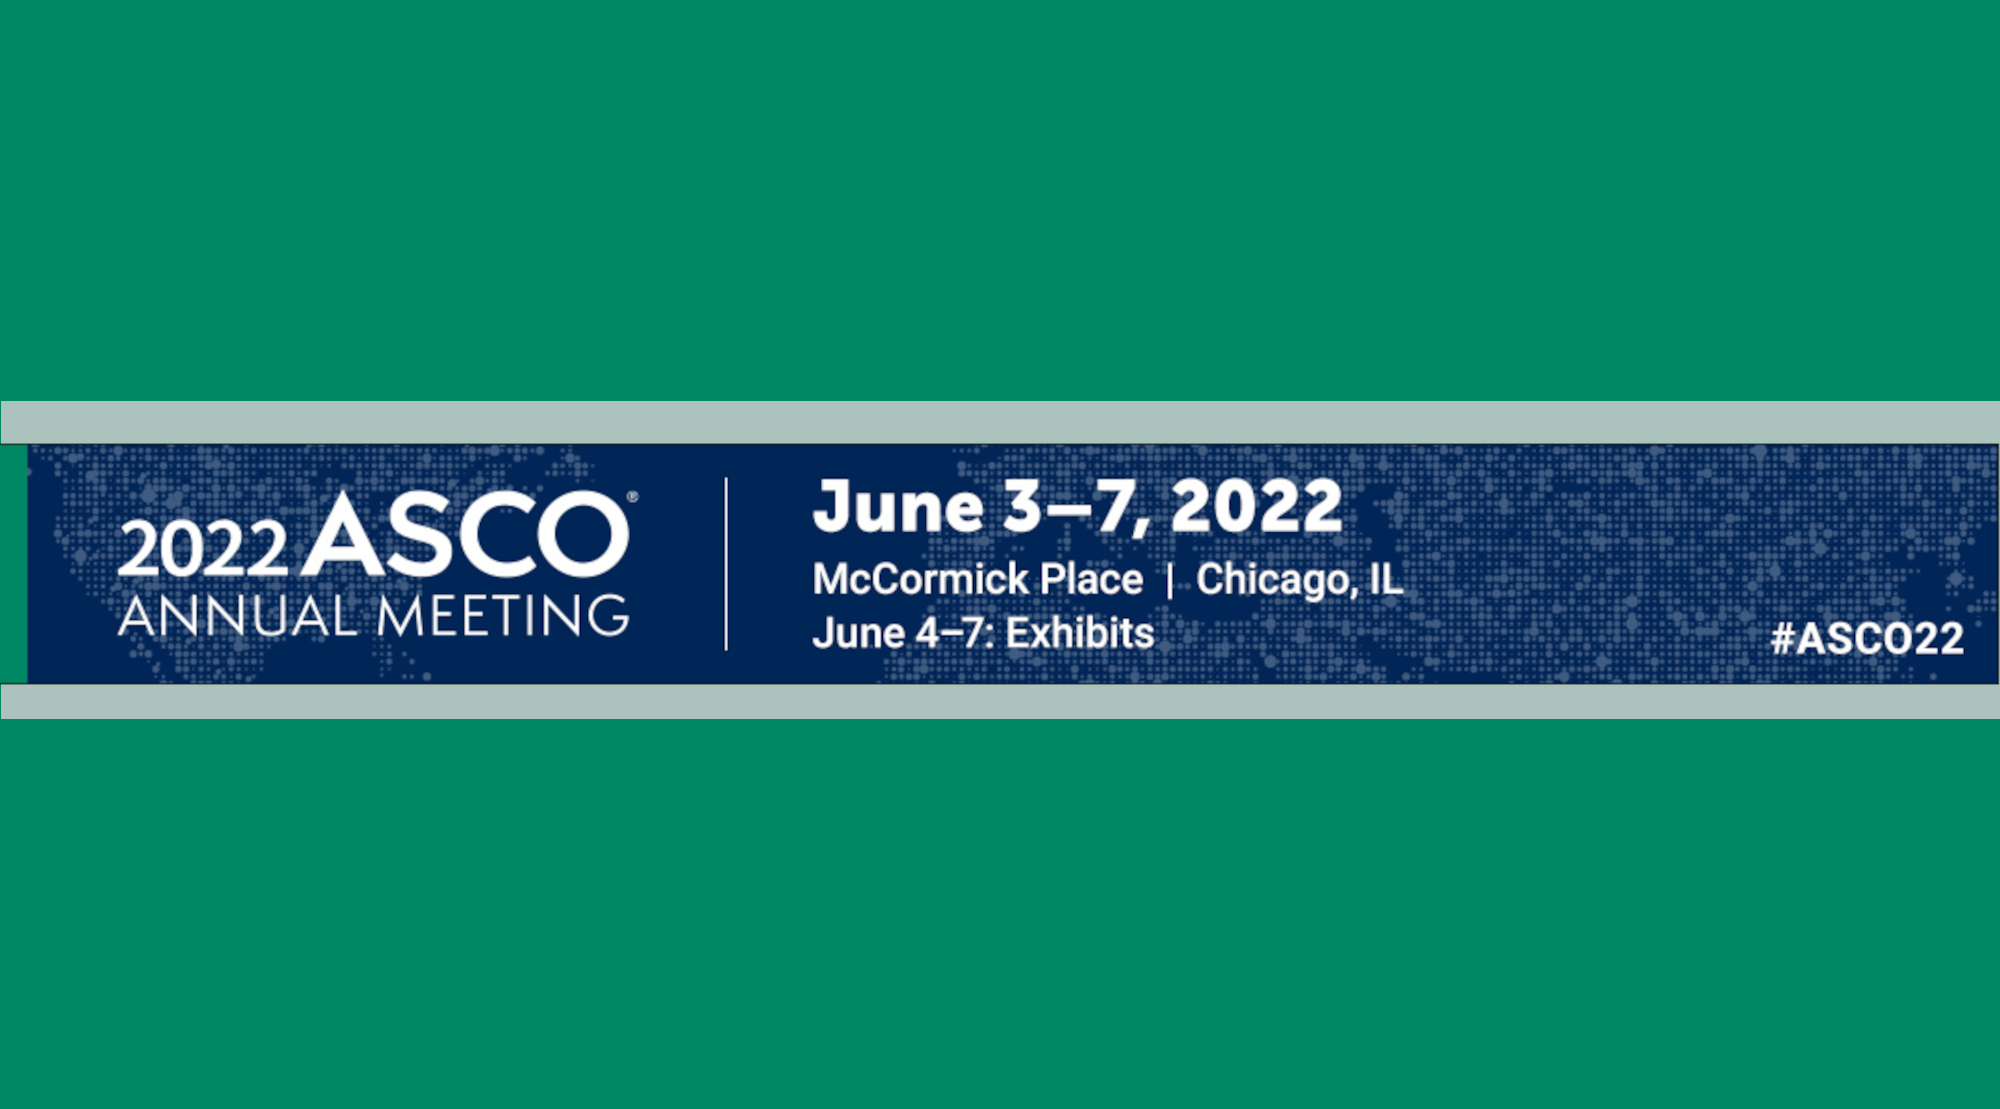 The 2022 ASCO Annual Meeting